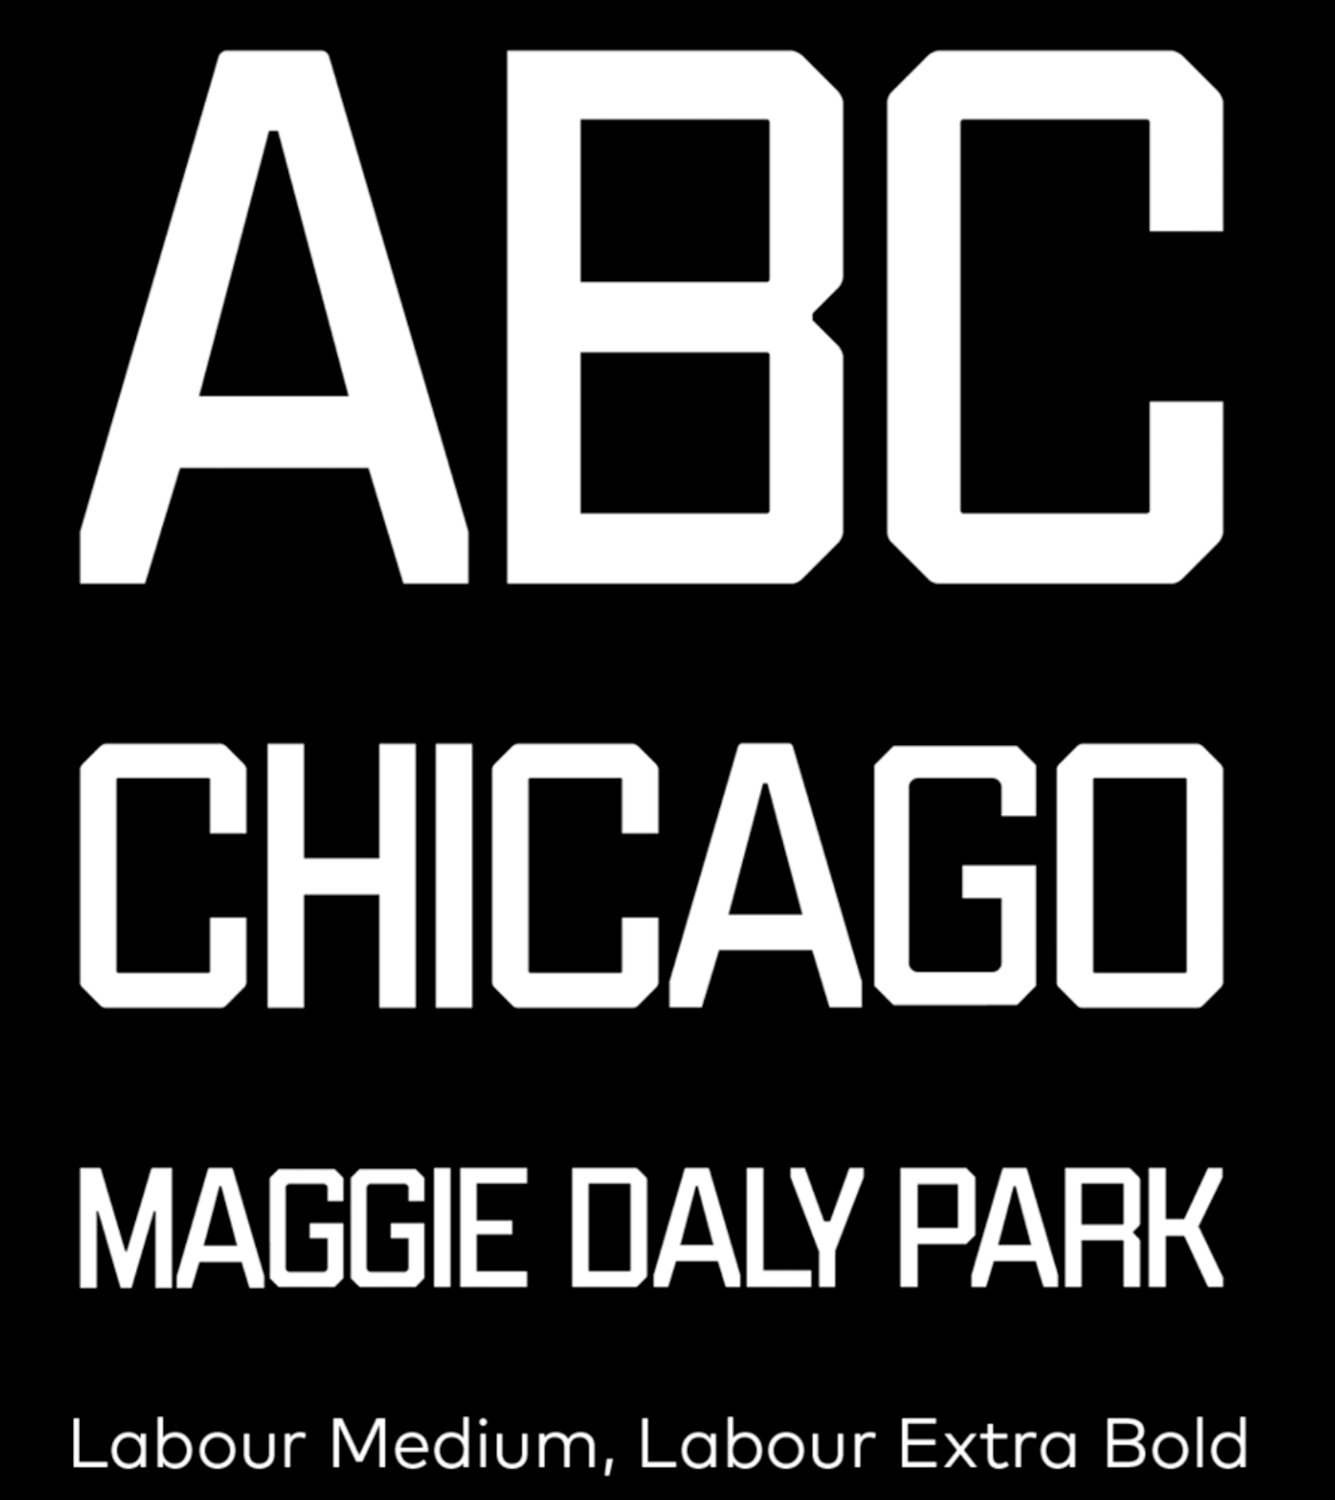 Maggie-Daley-Park-8.jpg